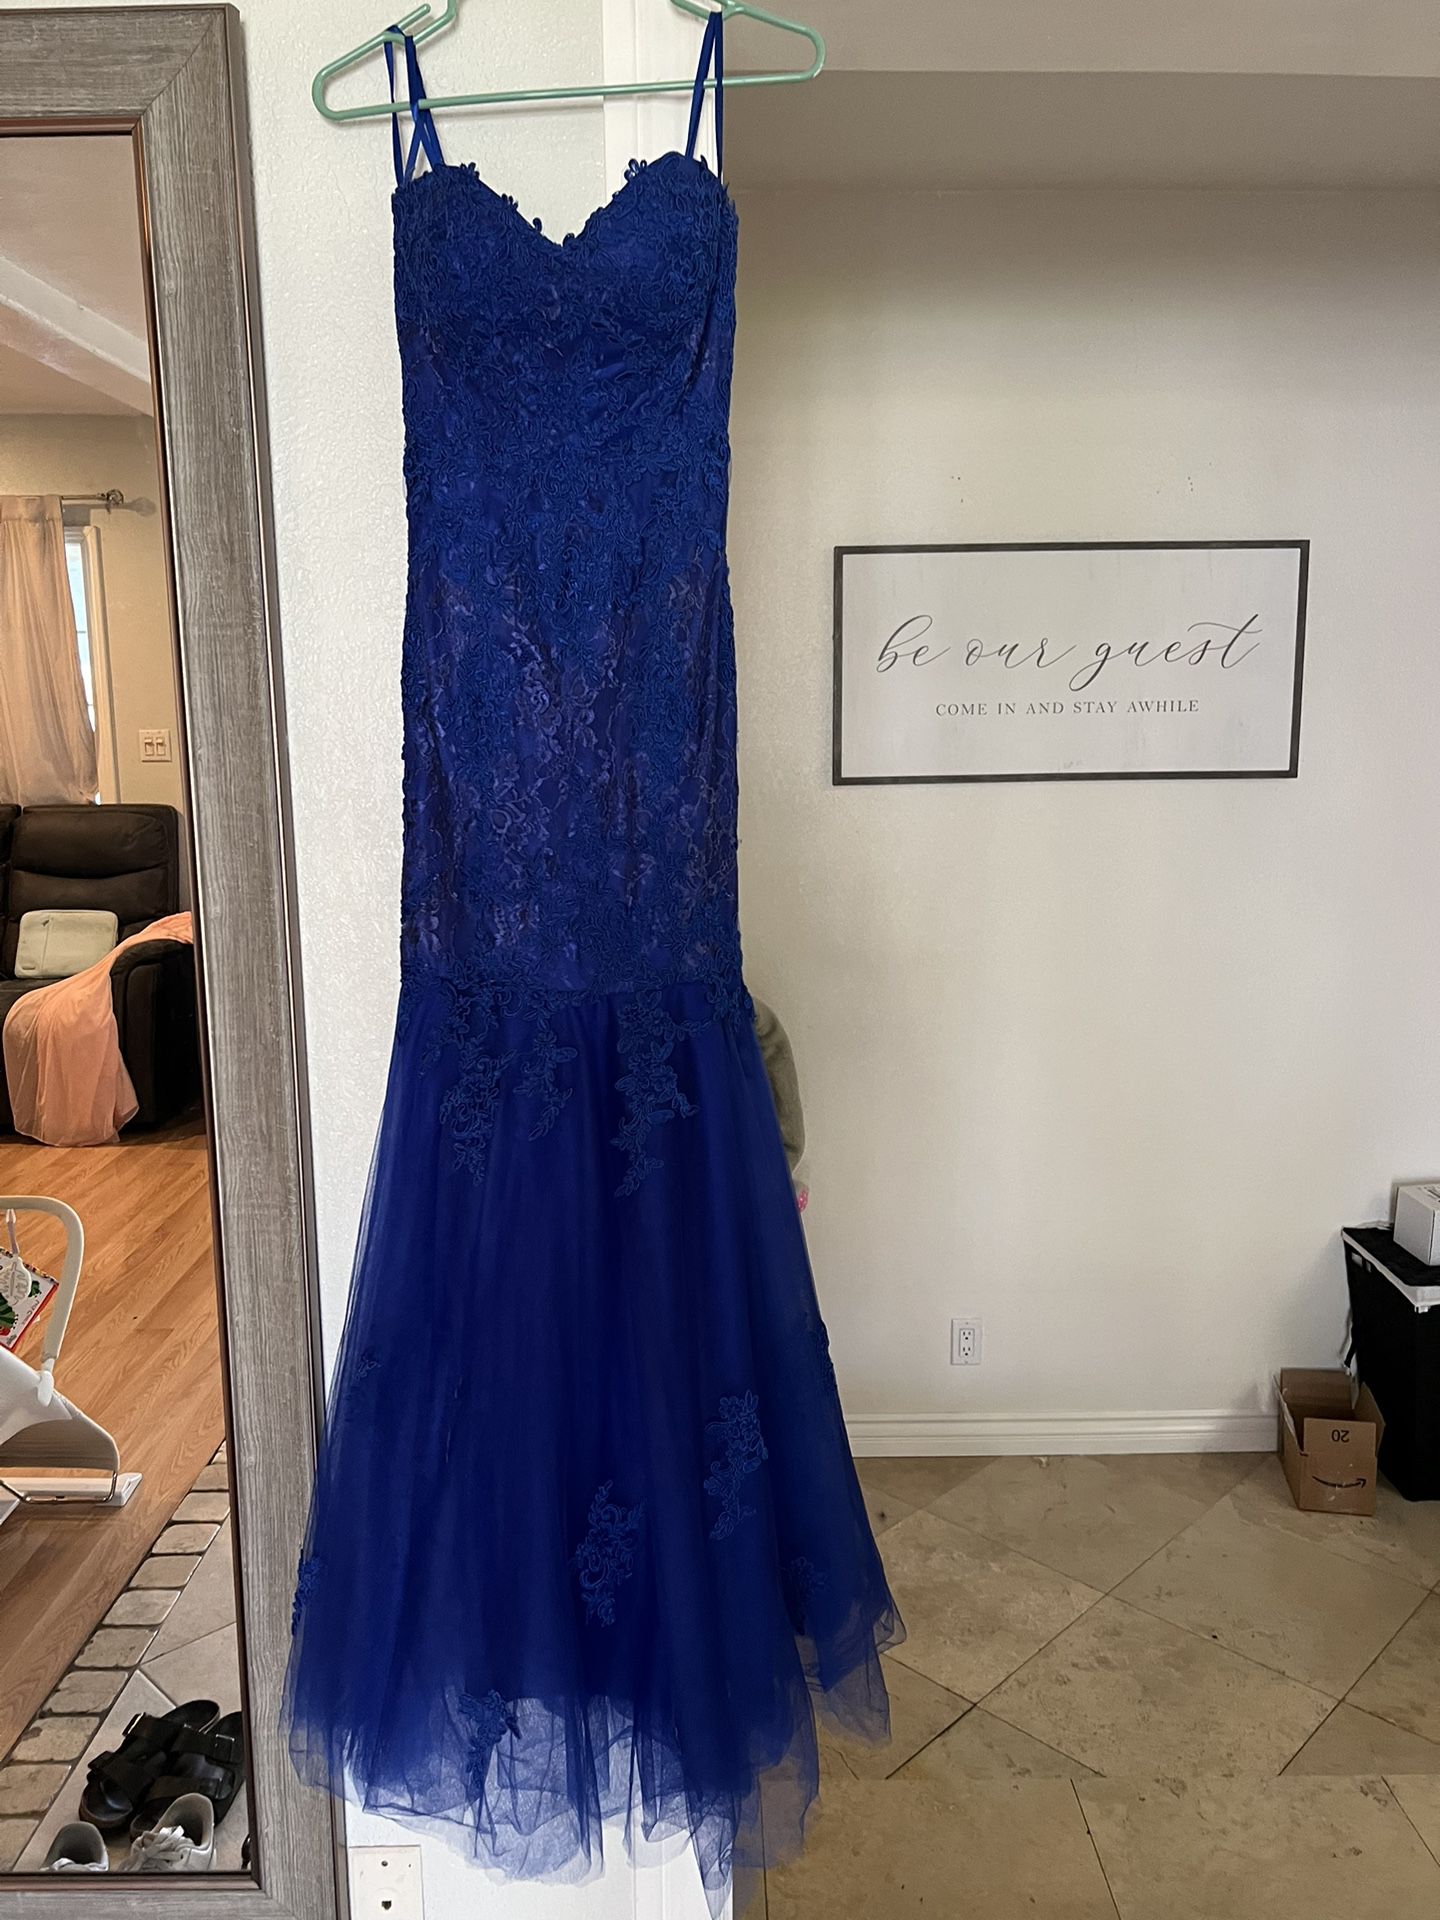 Blue Lacy Prom Dress/ Formal Dress 